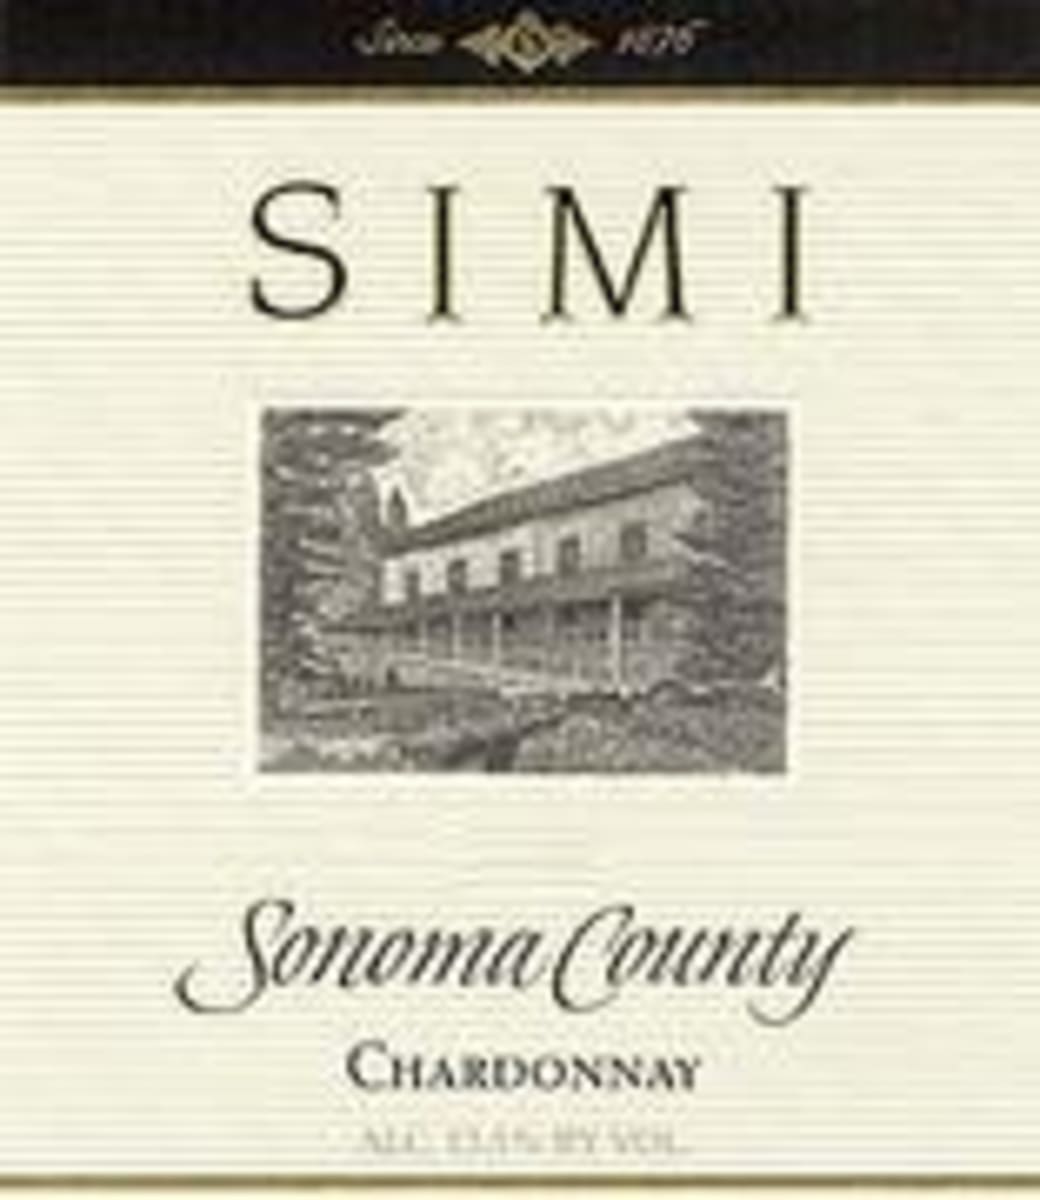 Simi Sonoma County Chardonnay 2000 Front Label